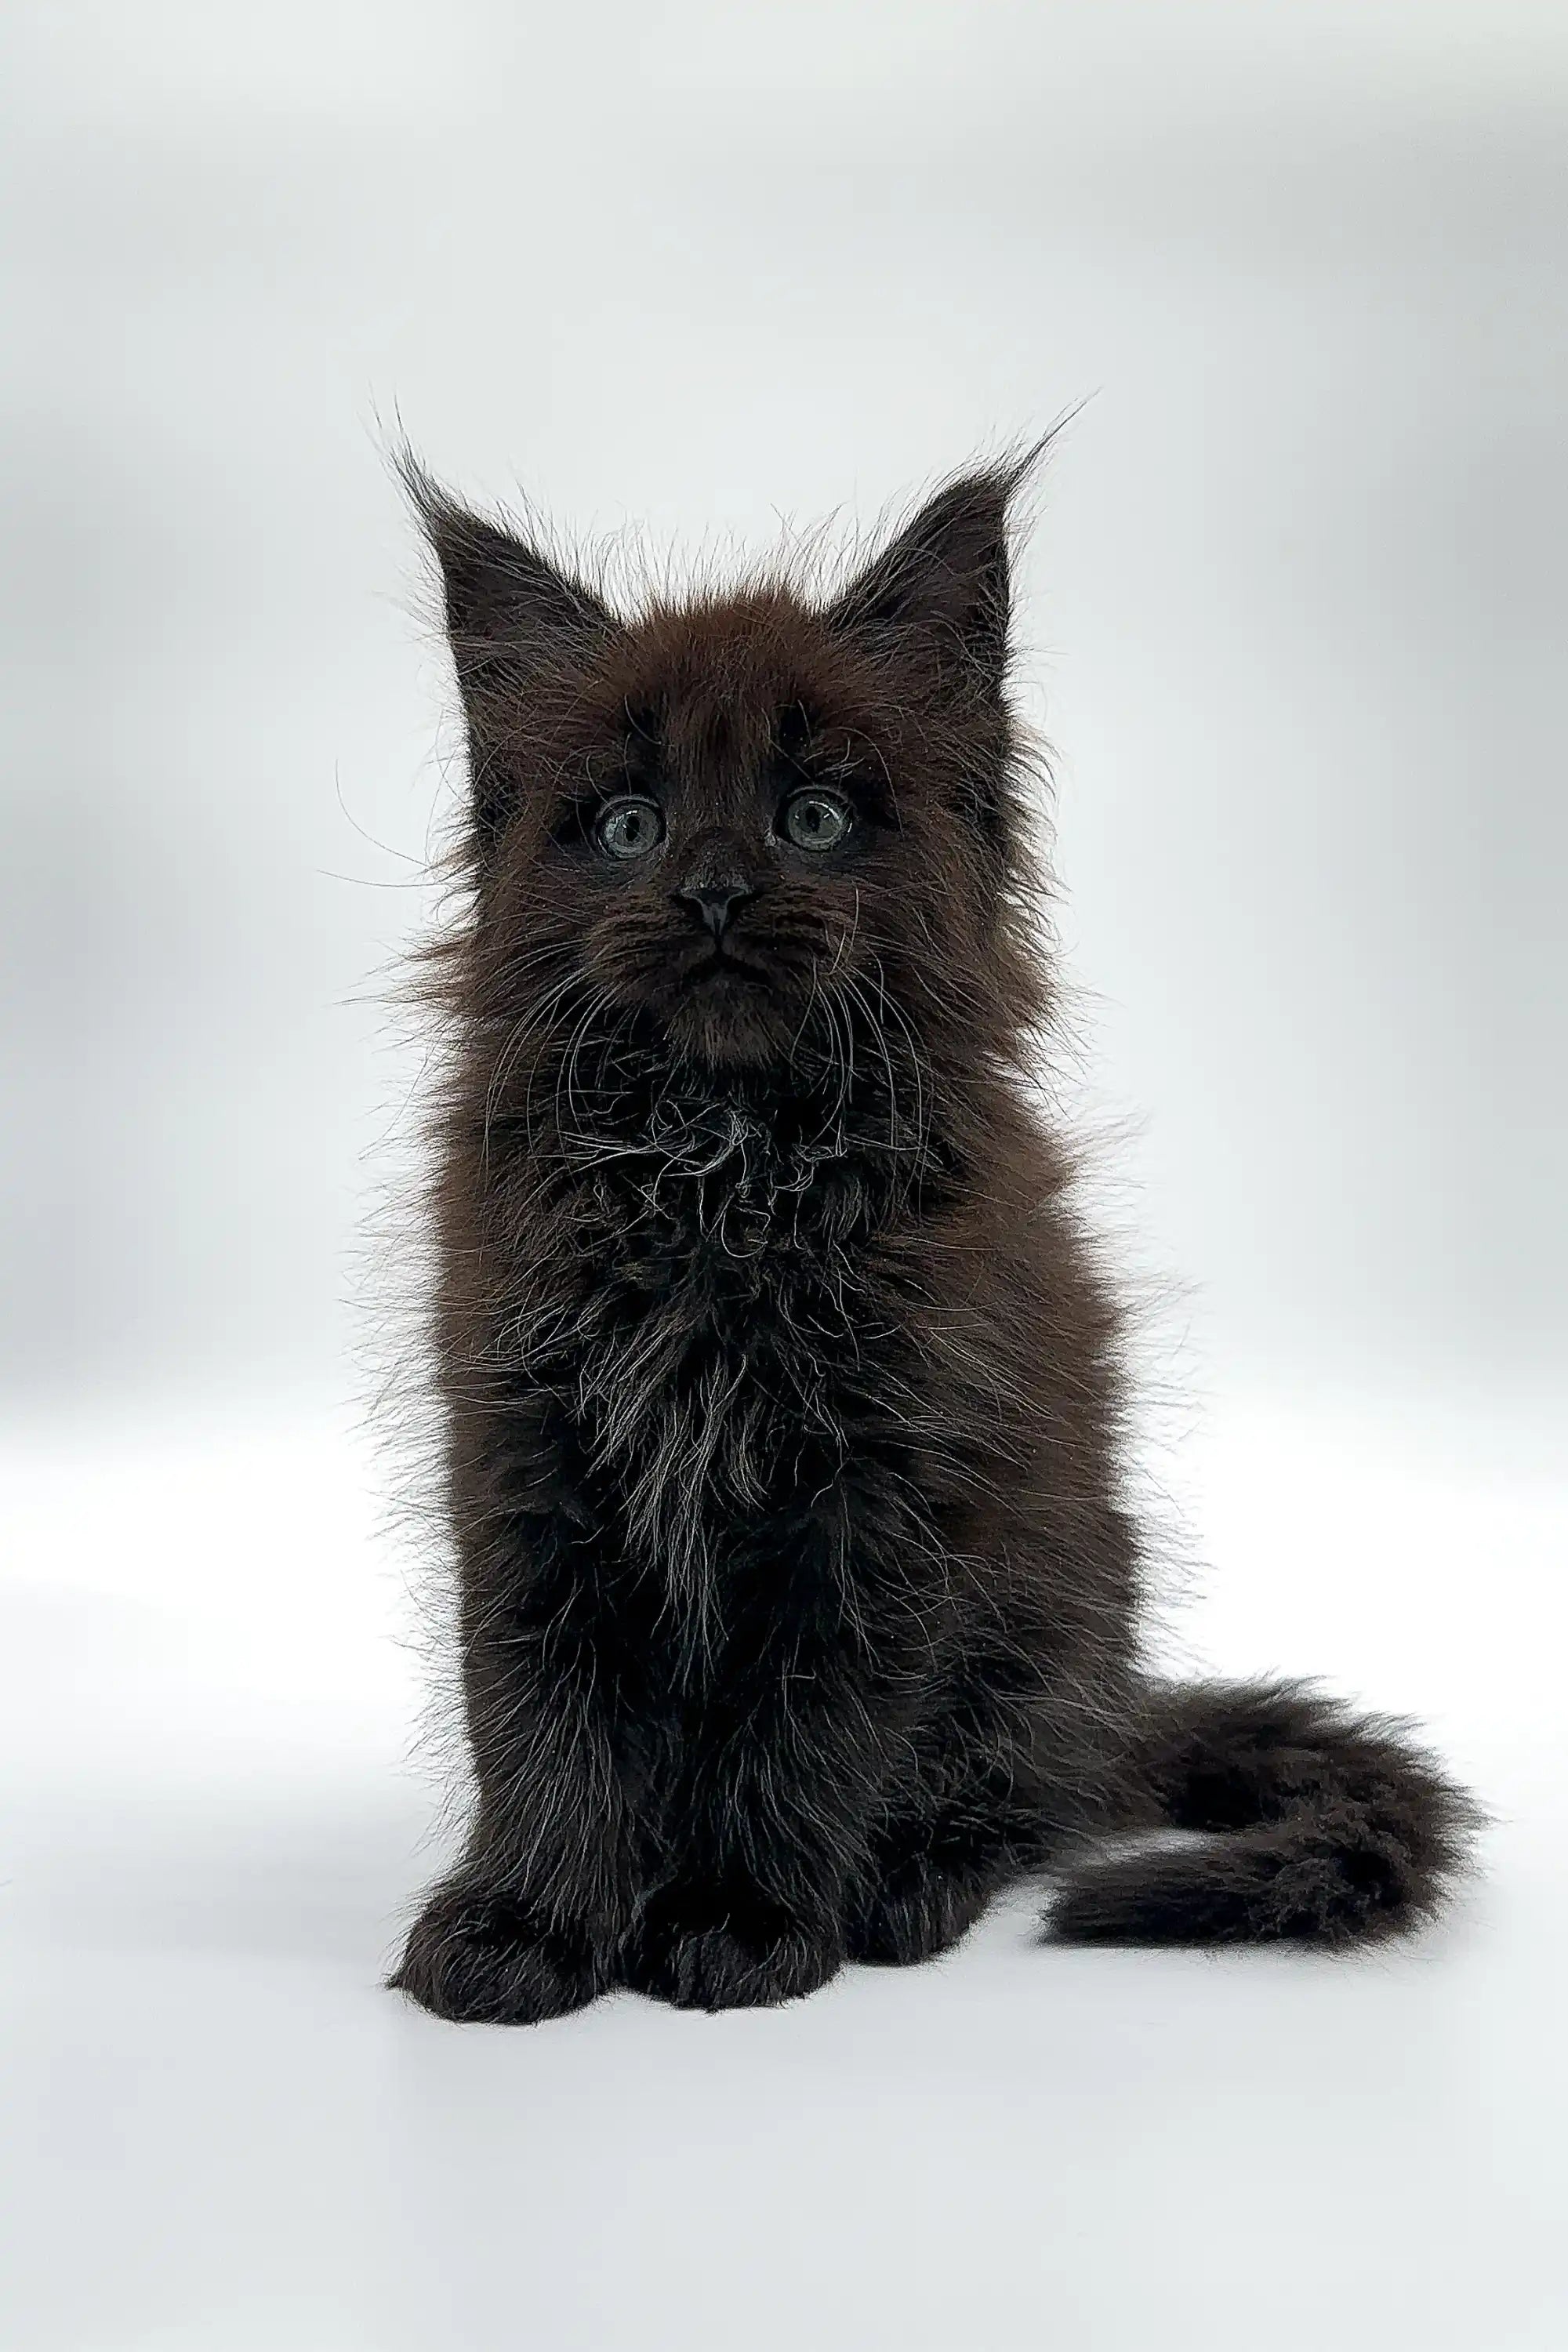 Maine Coon Kittens for Sale Rania | Kitten